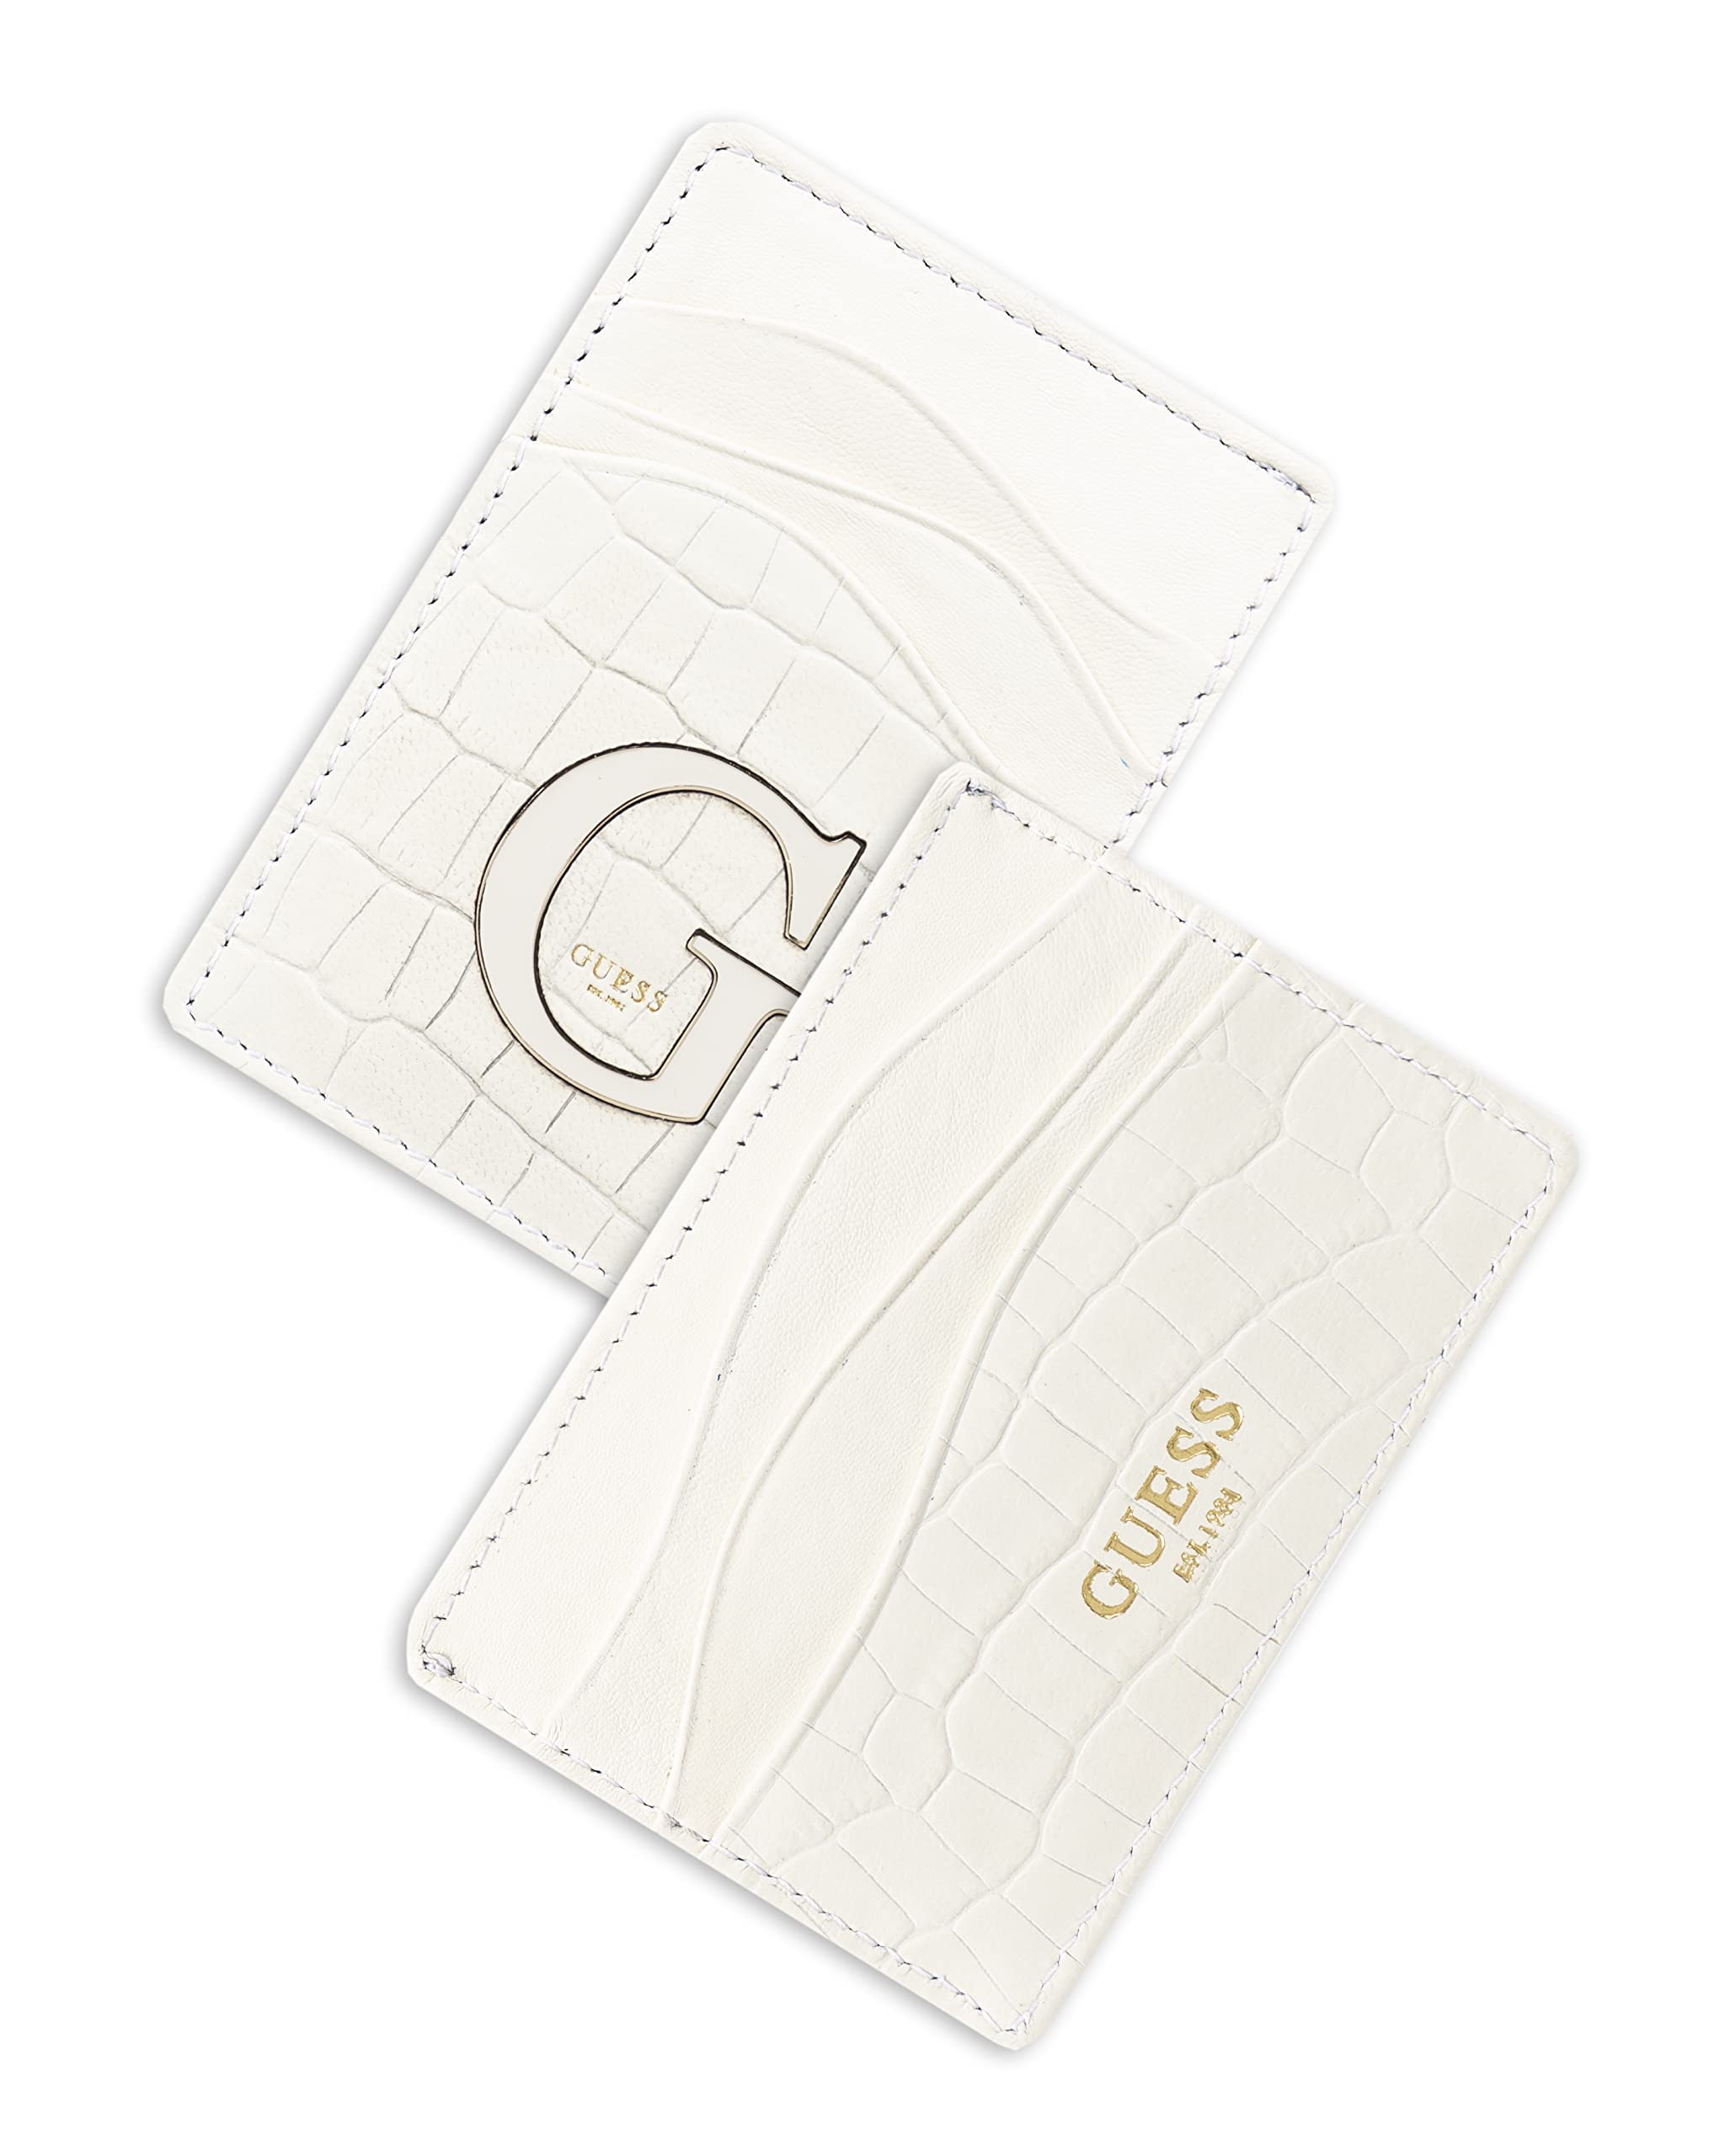 GUESS Men's RFID Cardcase Wallet, Bone, One Size